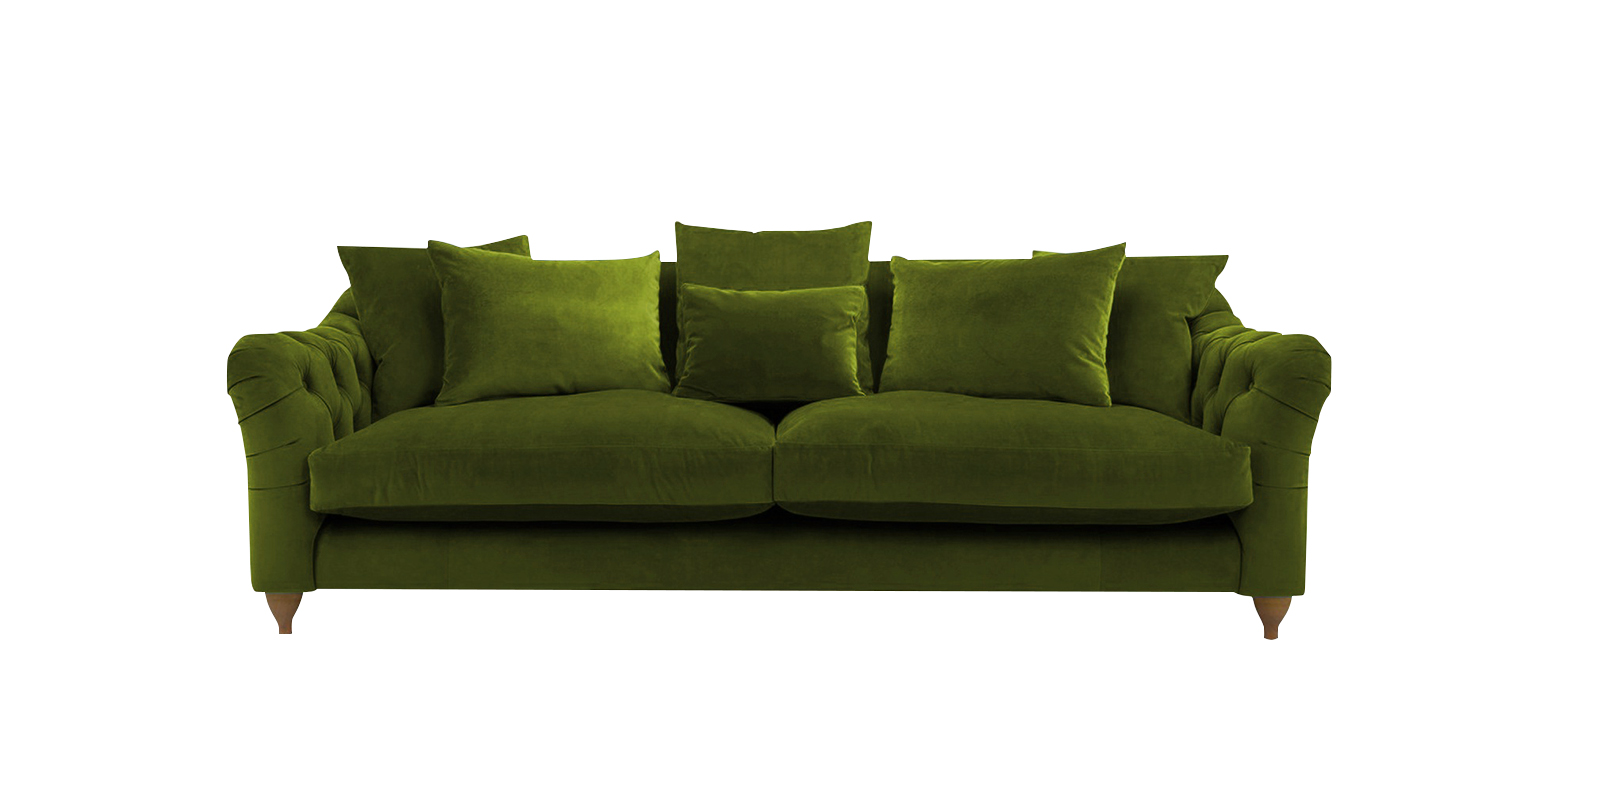 Grendale 3 Seater Sofa in Dark Olive Green colour - Dreamzz Furniture |  Online Furniture Shop